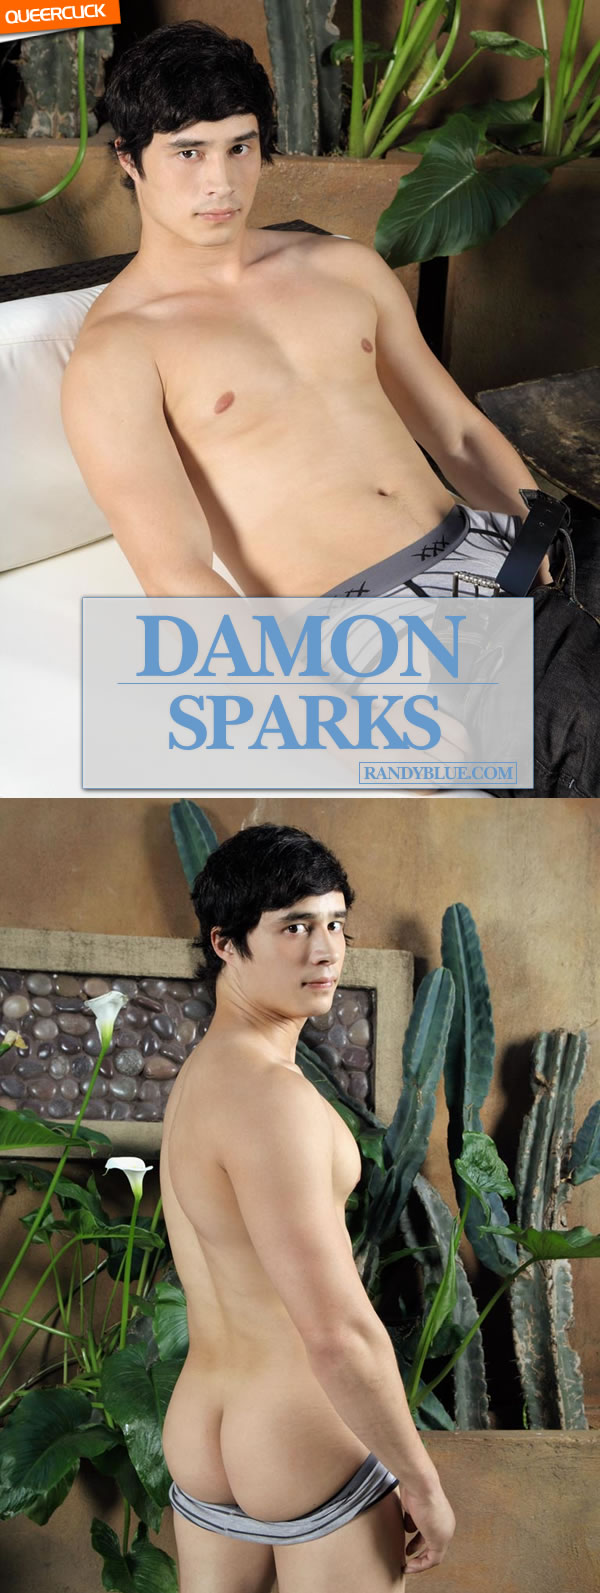 Randy Blue: Damon Sparks